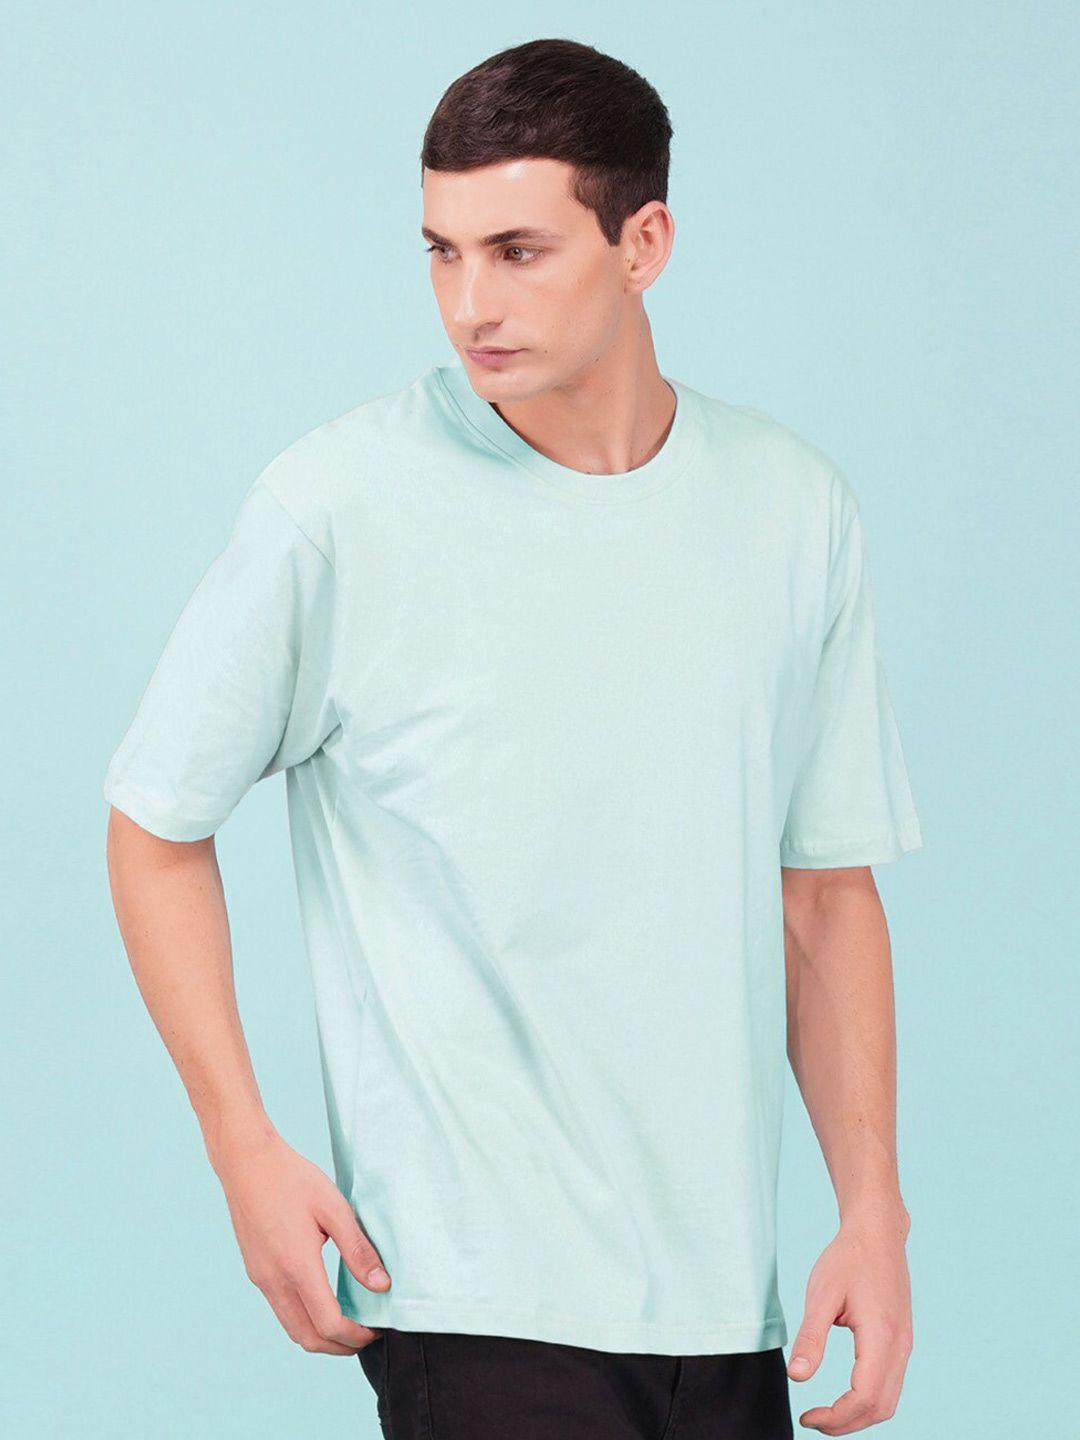 nusyl-round-neck-drop-shoulder-sleeves-oversized-t-shirt